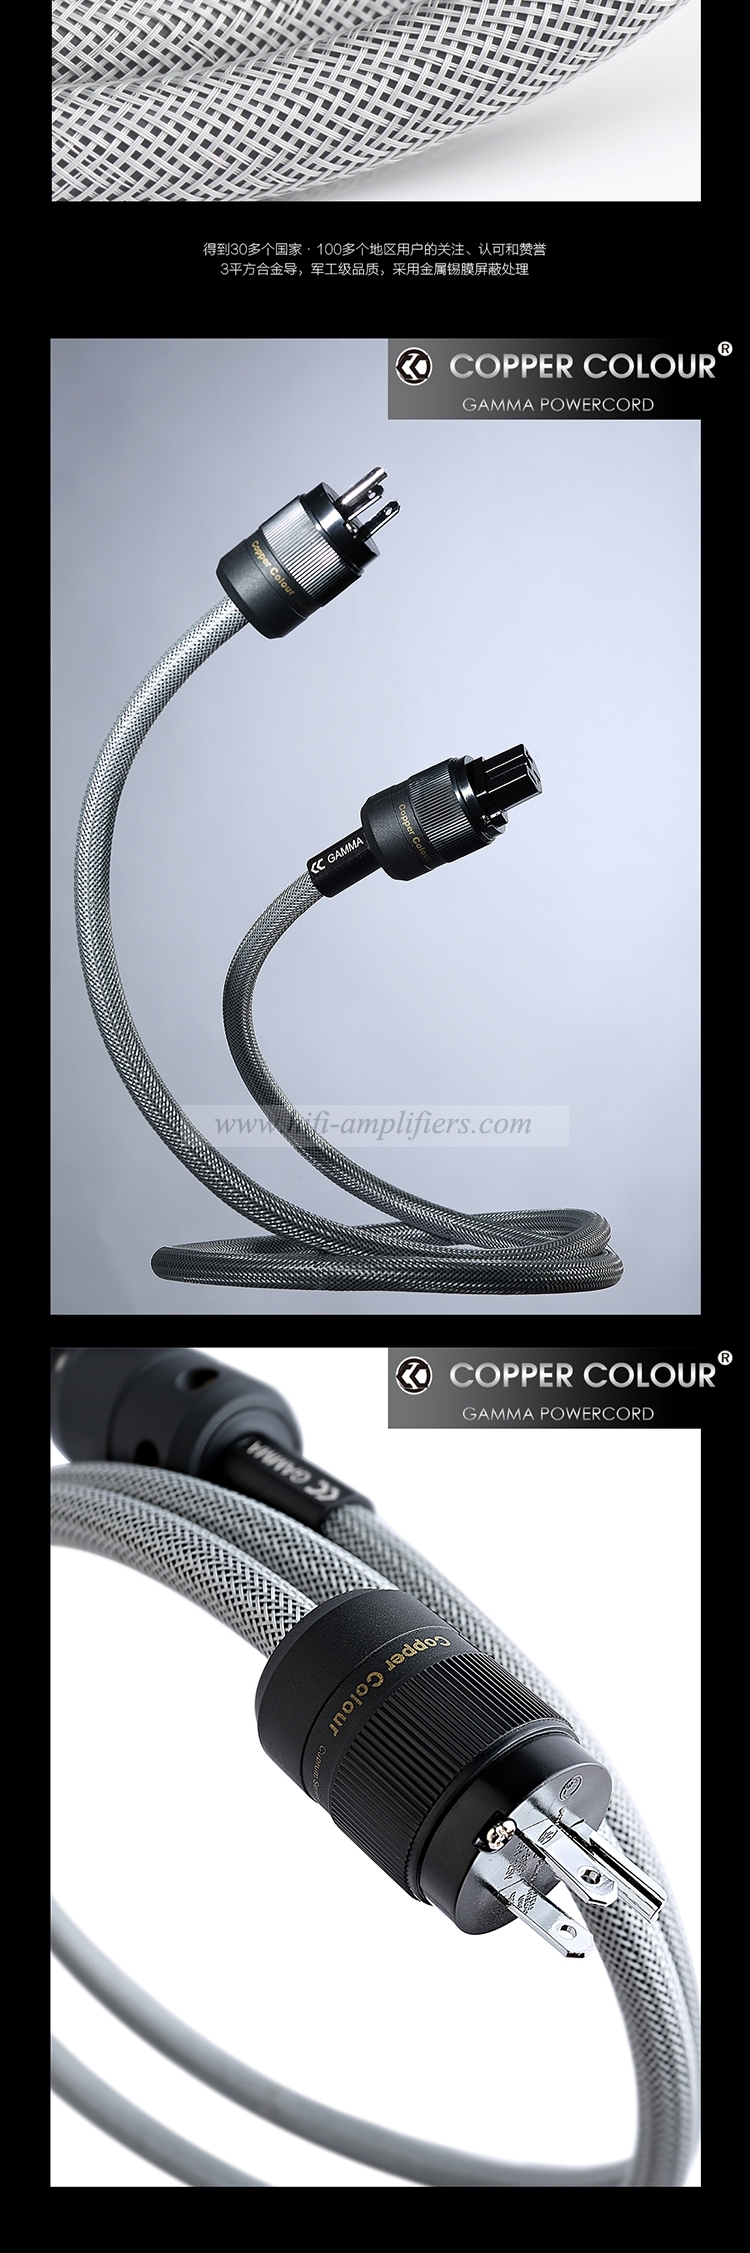 Copper Colour CC GAMMA Audiophile OCC Silver powercord AU/US/EUR Schuko Plug